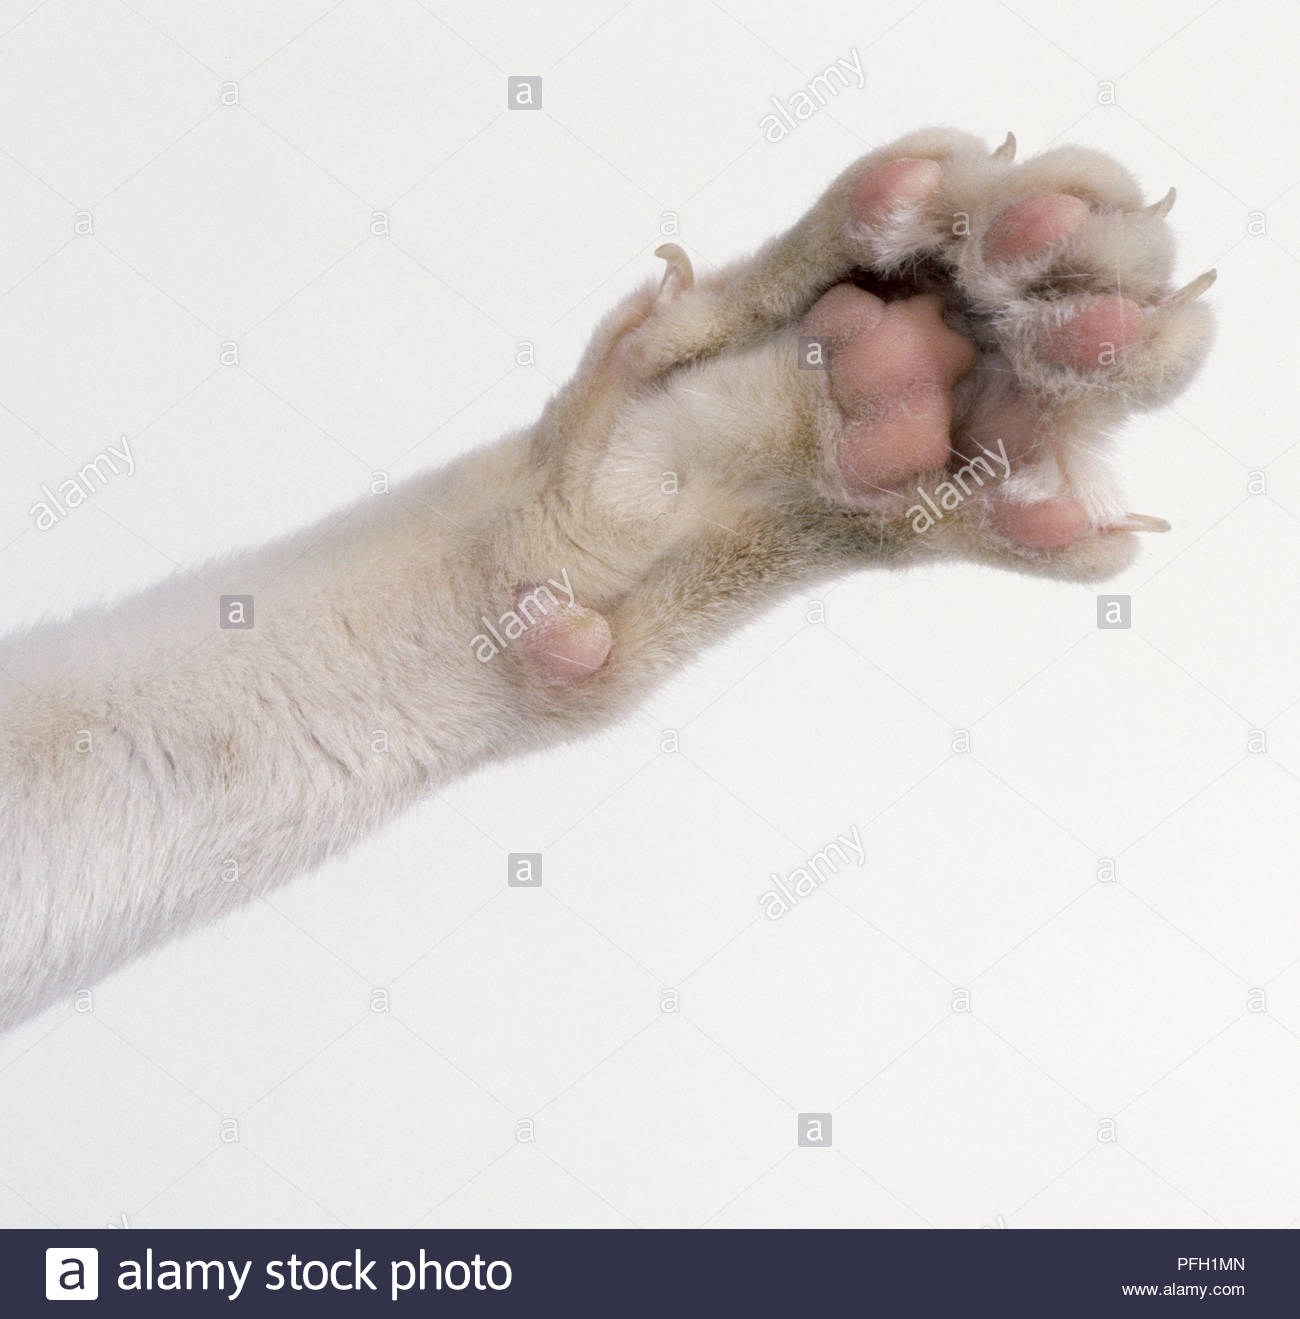 Пальцы у кошек на передних лапах - картинки и фото koshka.top